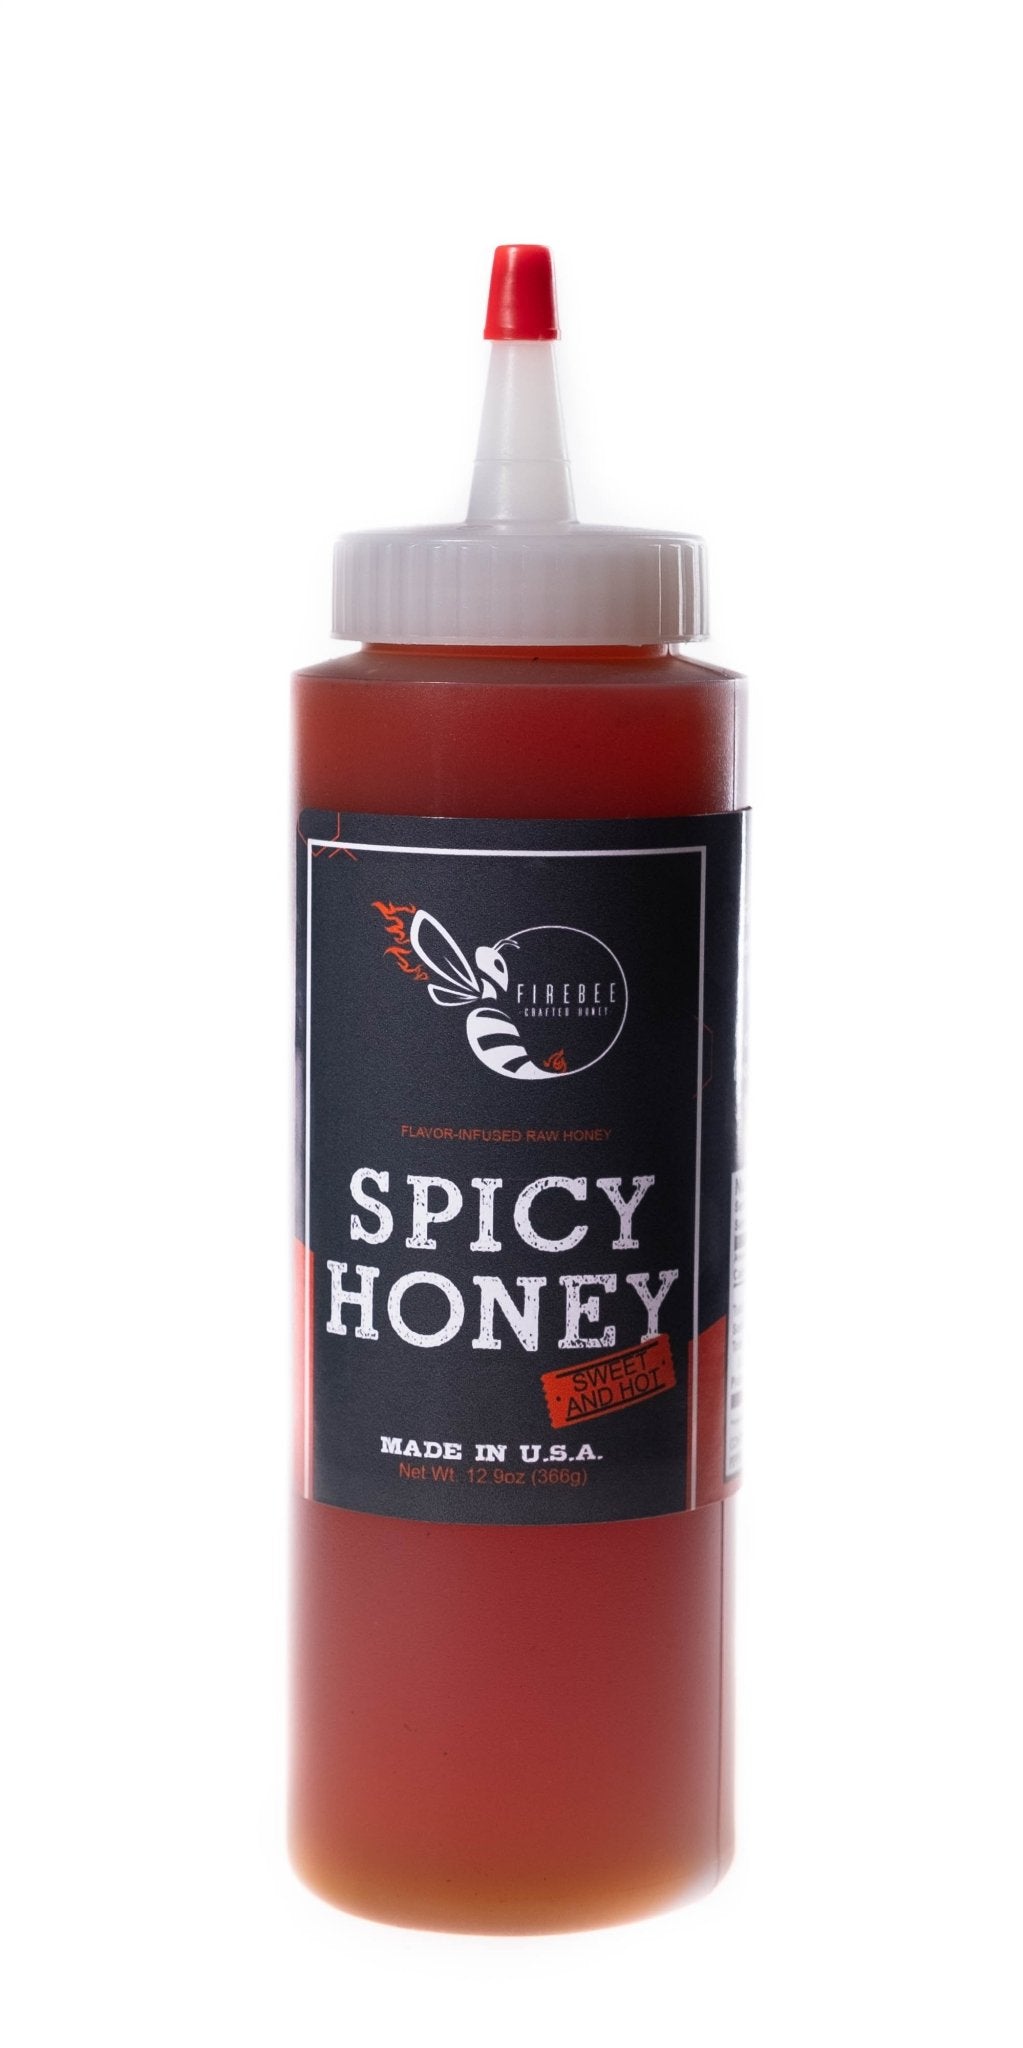 Firebee Spicy Honey - Firebee Honey